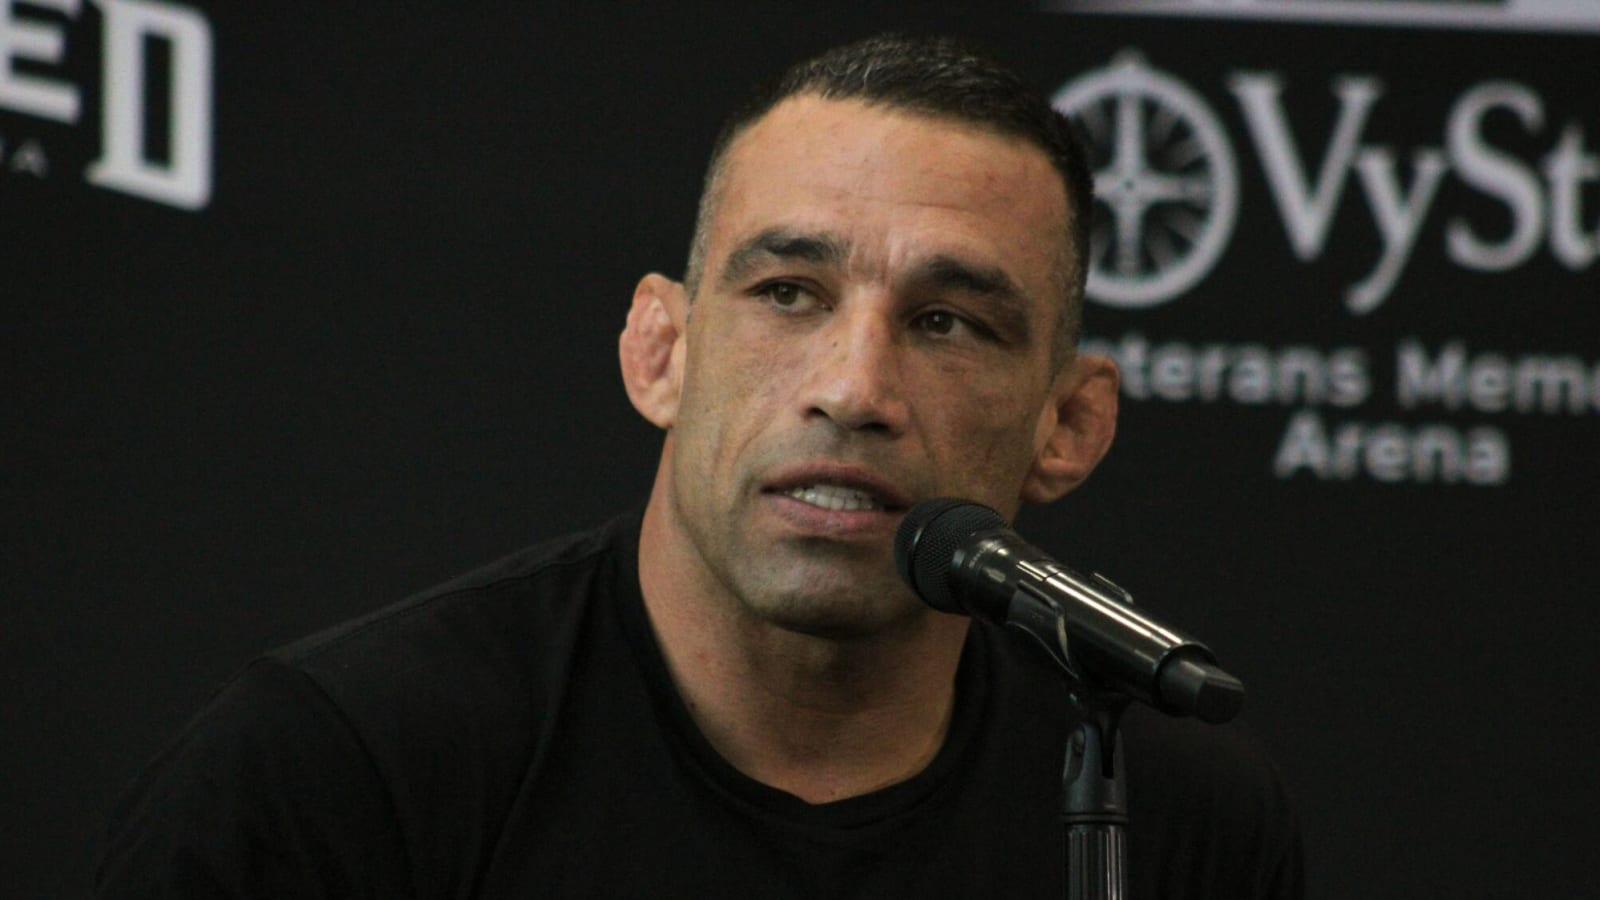 Fabricio Werdum to Host ‘Papo Cruzado’ MMA Talk Show on Combate